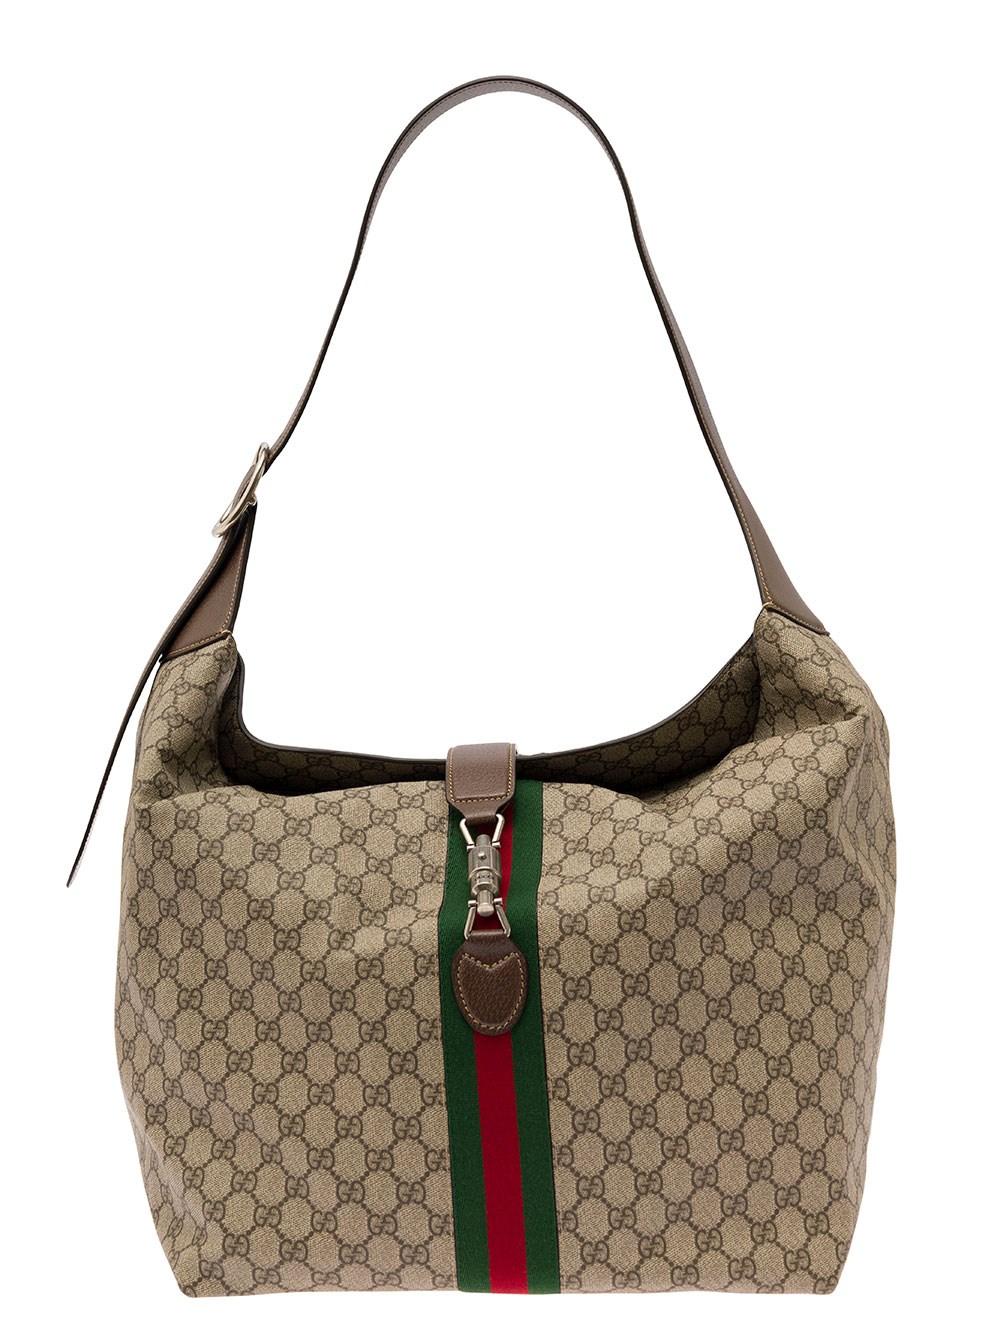 Gucci Beige/Ebony Supreme GG Canvas Messenger Bag with Web Detail